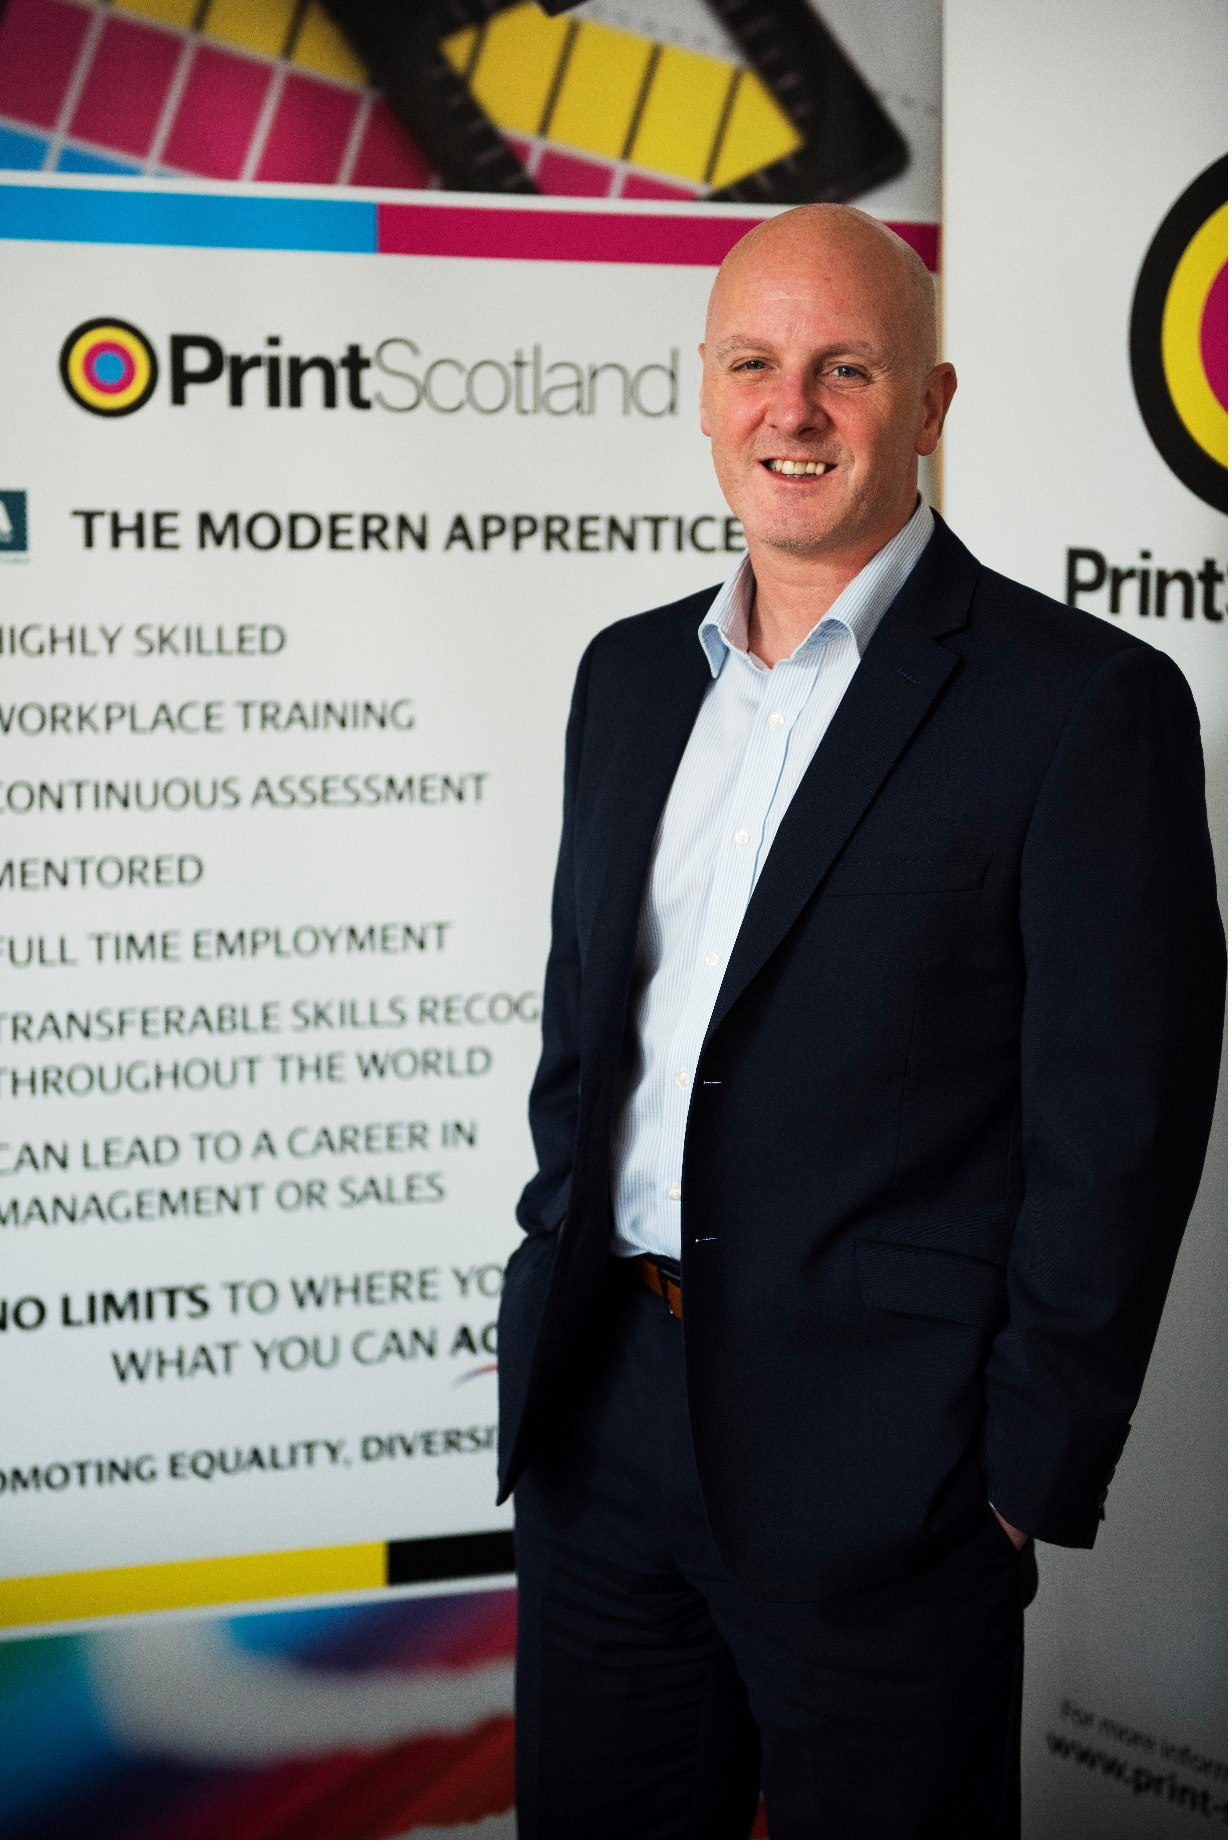 Kevin Creechan, President of Print Scotland